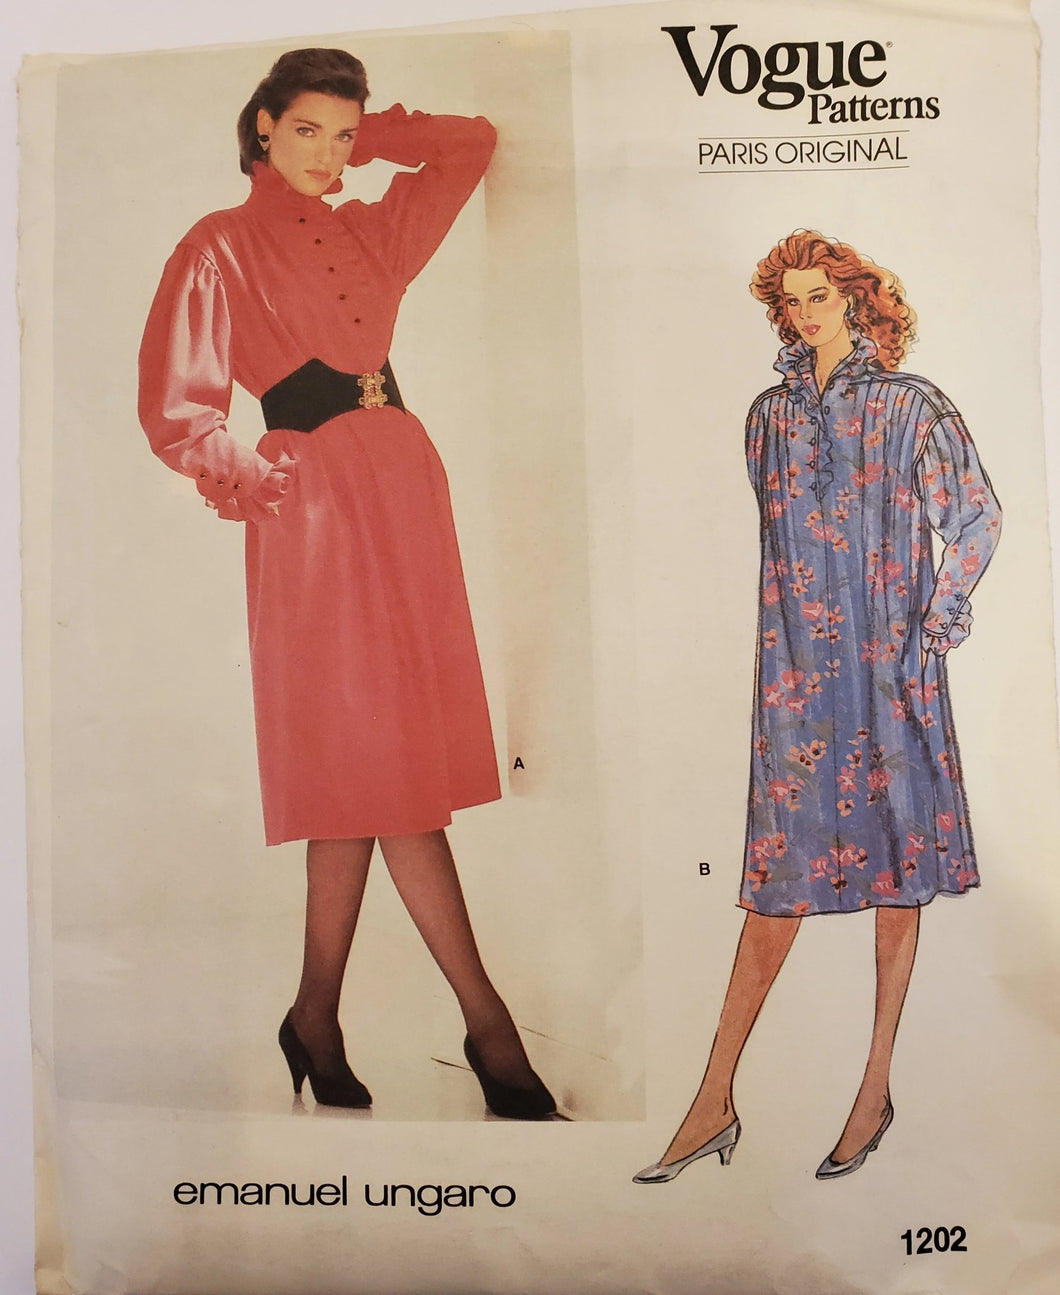 Vogue Pattern 1202, Paris Original Emanuel Ungaro, Dress Size 12, Vintage and Very Rare